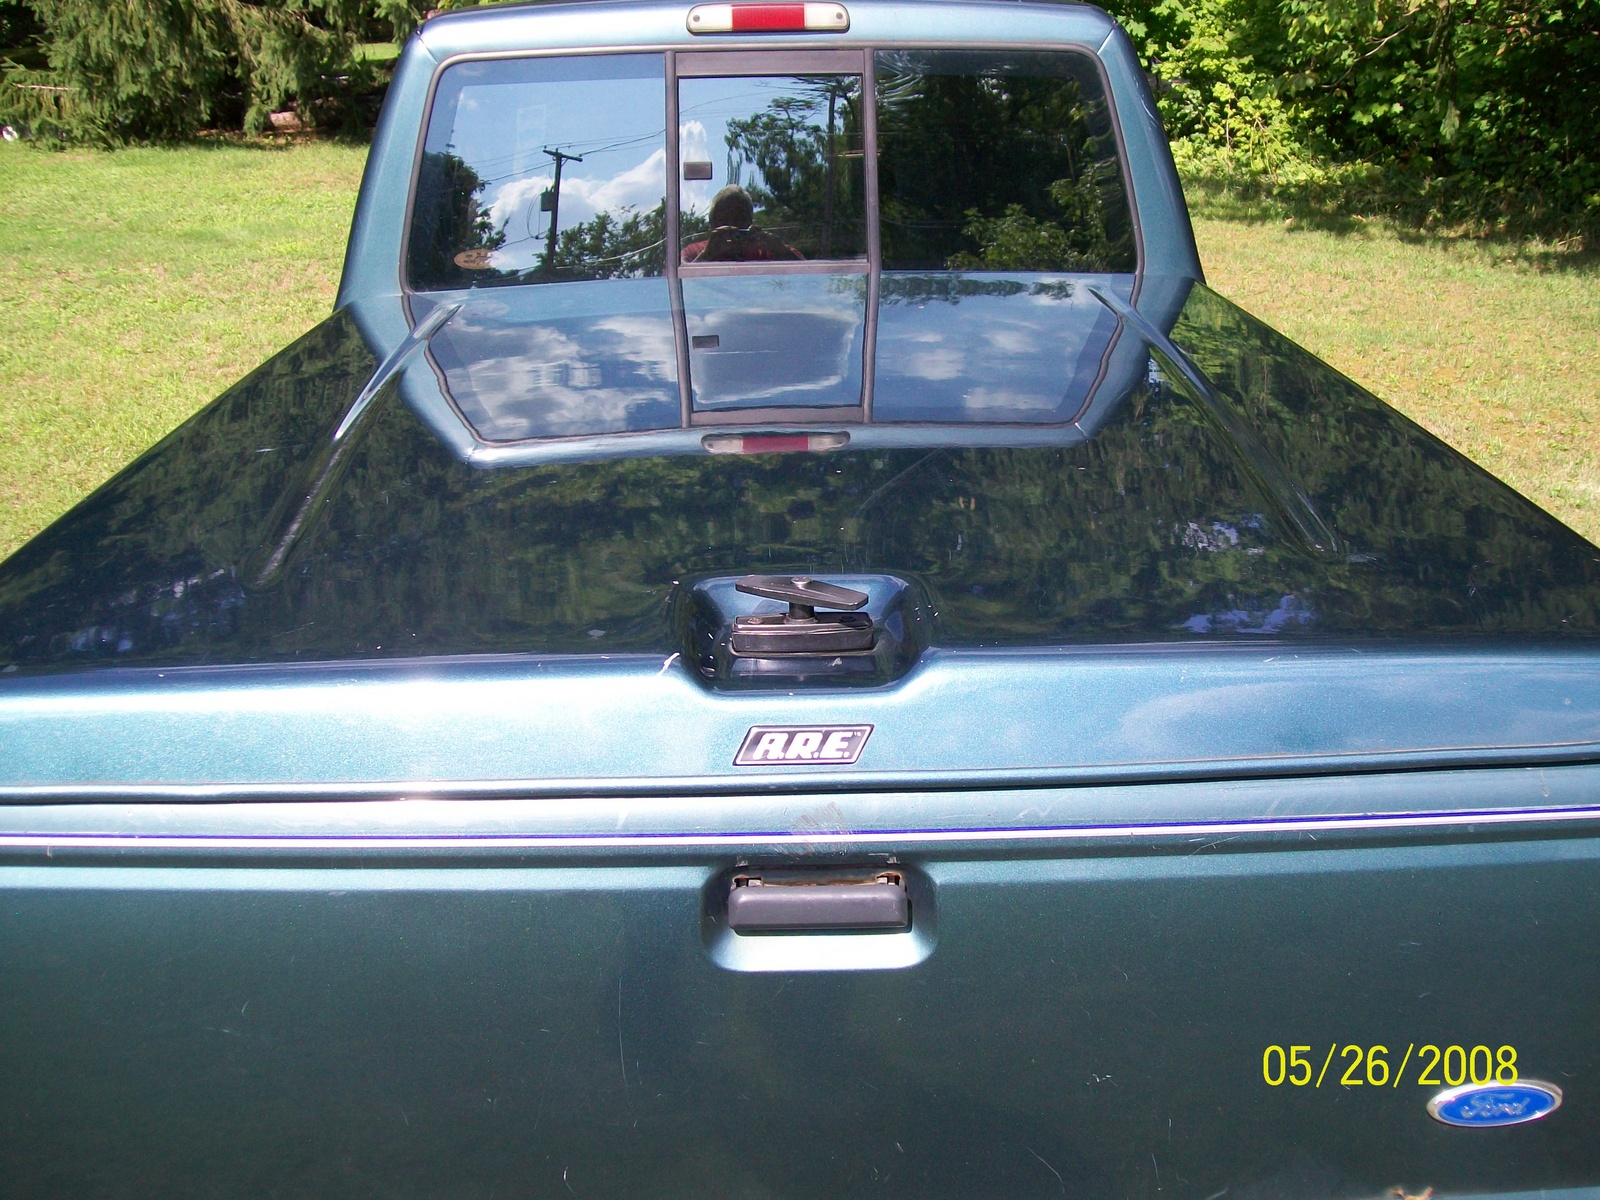 1997 Ford ranger extended cab price #2